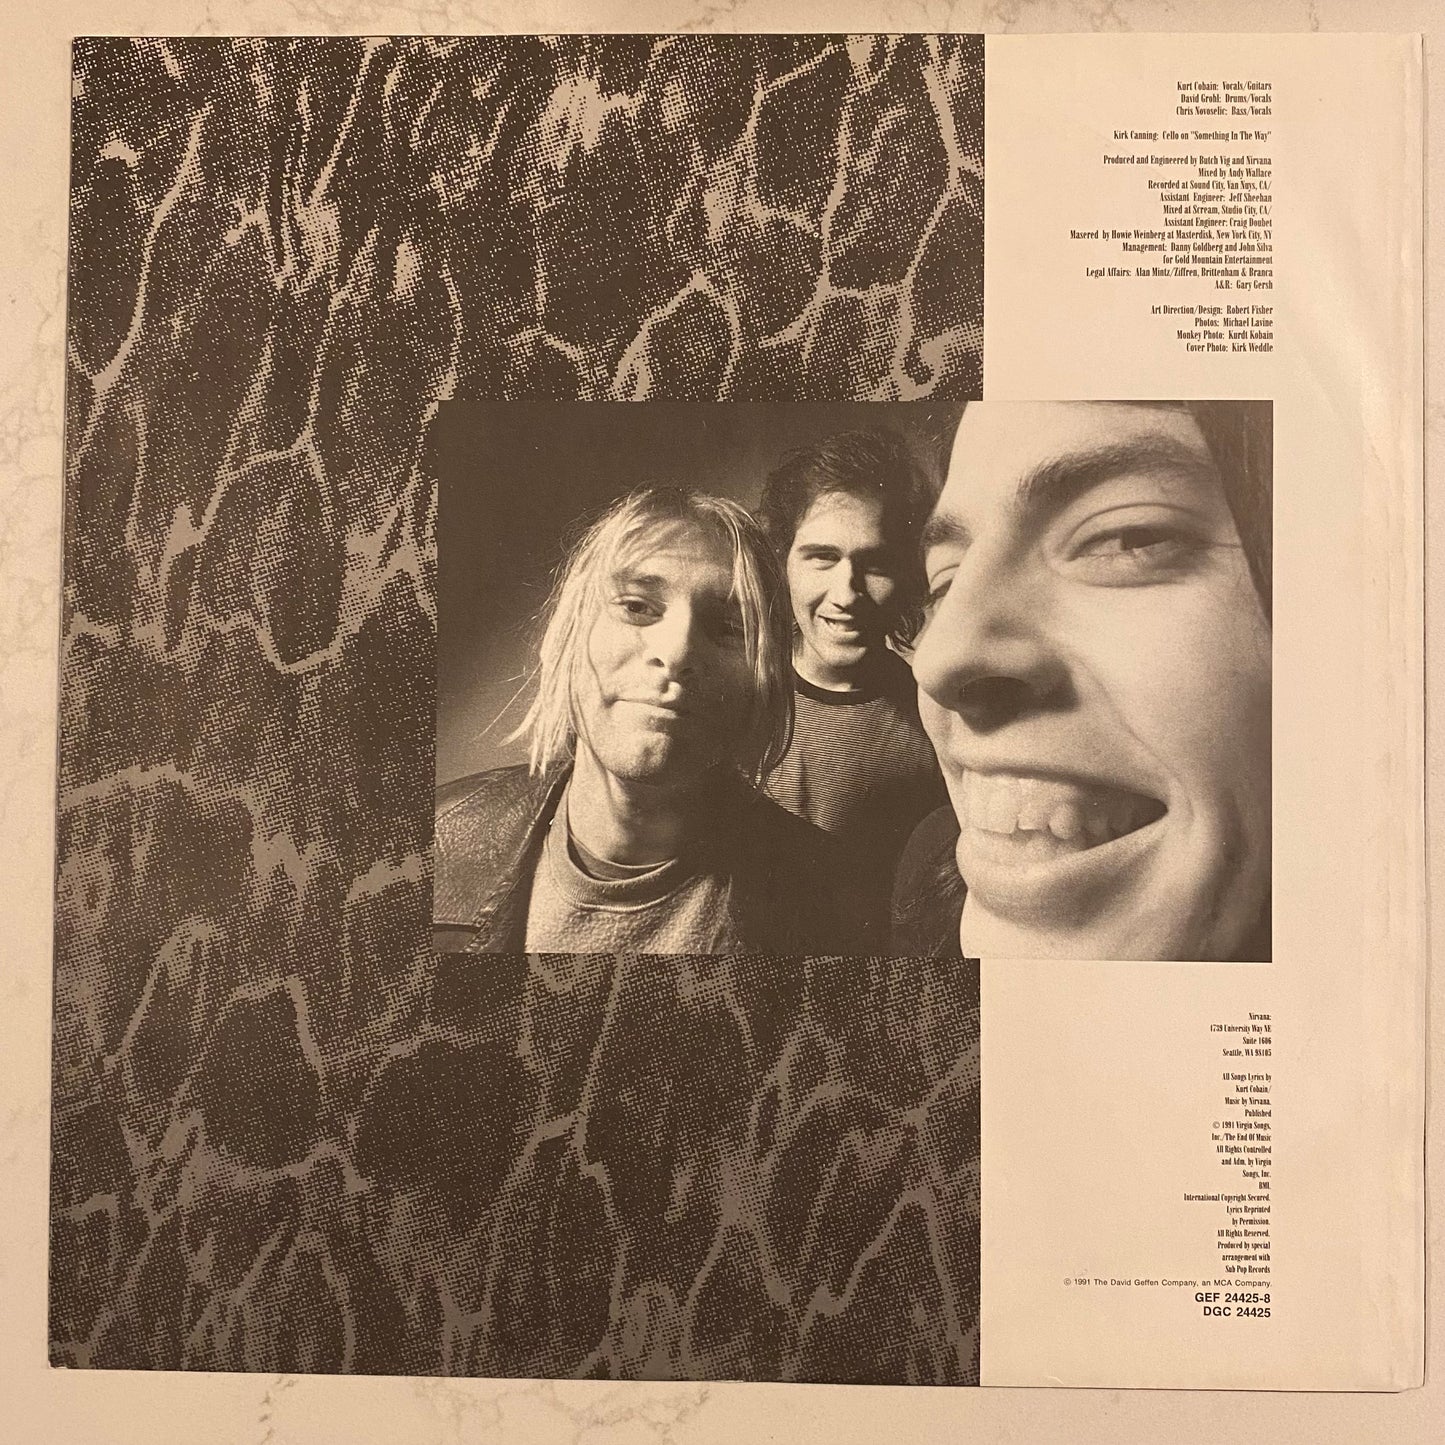 Nirvana - Nevermind (LP, Album, M/Print) (L)